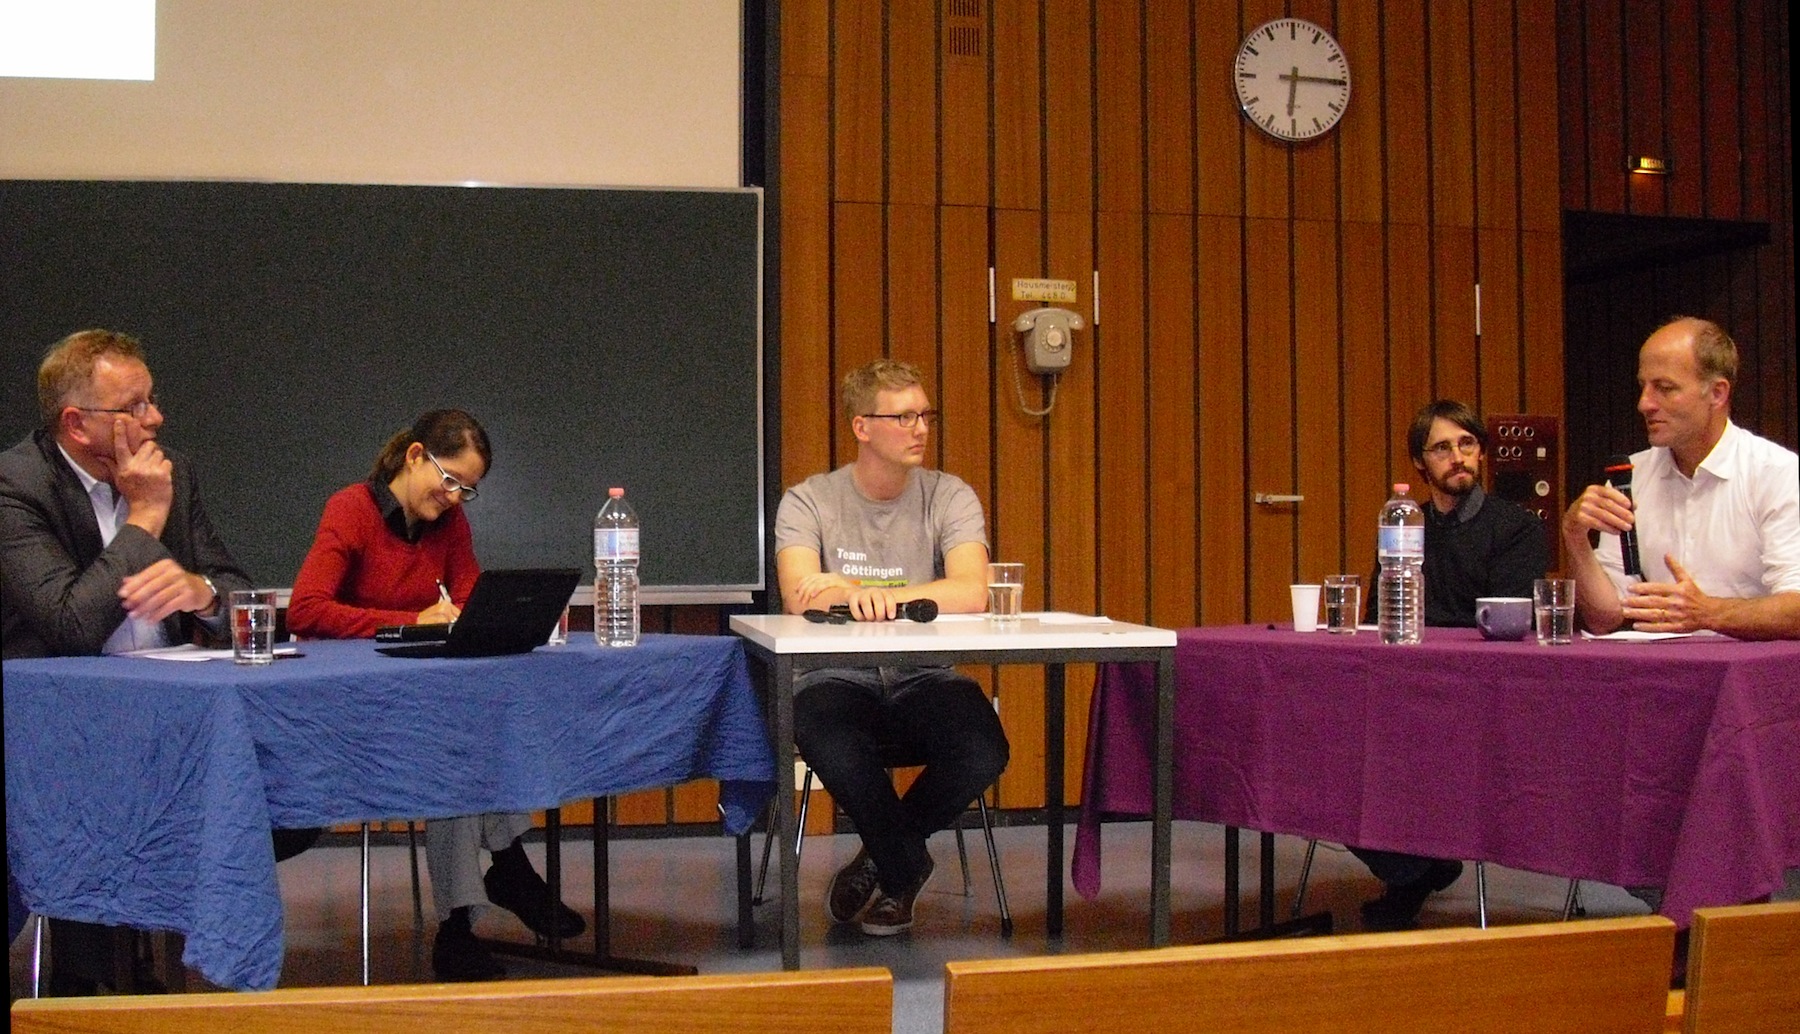 Panel discussion with Dr. Strittmatter, Dr. Deplazes-Zemp, Erik Schliep, Mr. Karberg, and Prof. Bölker (from left to right)